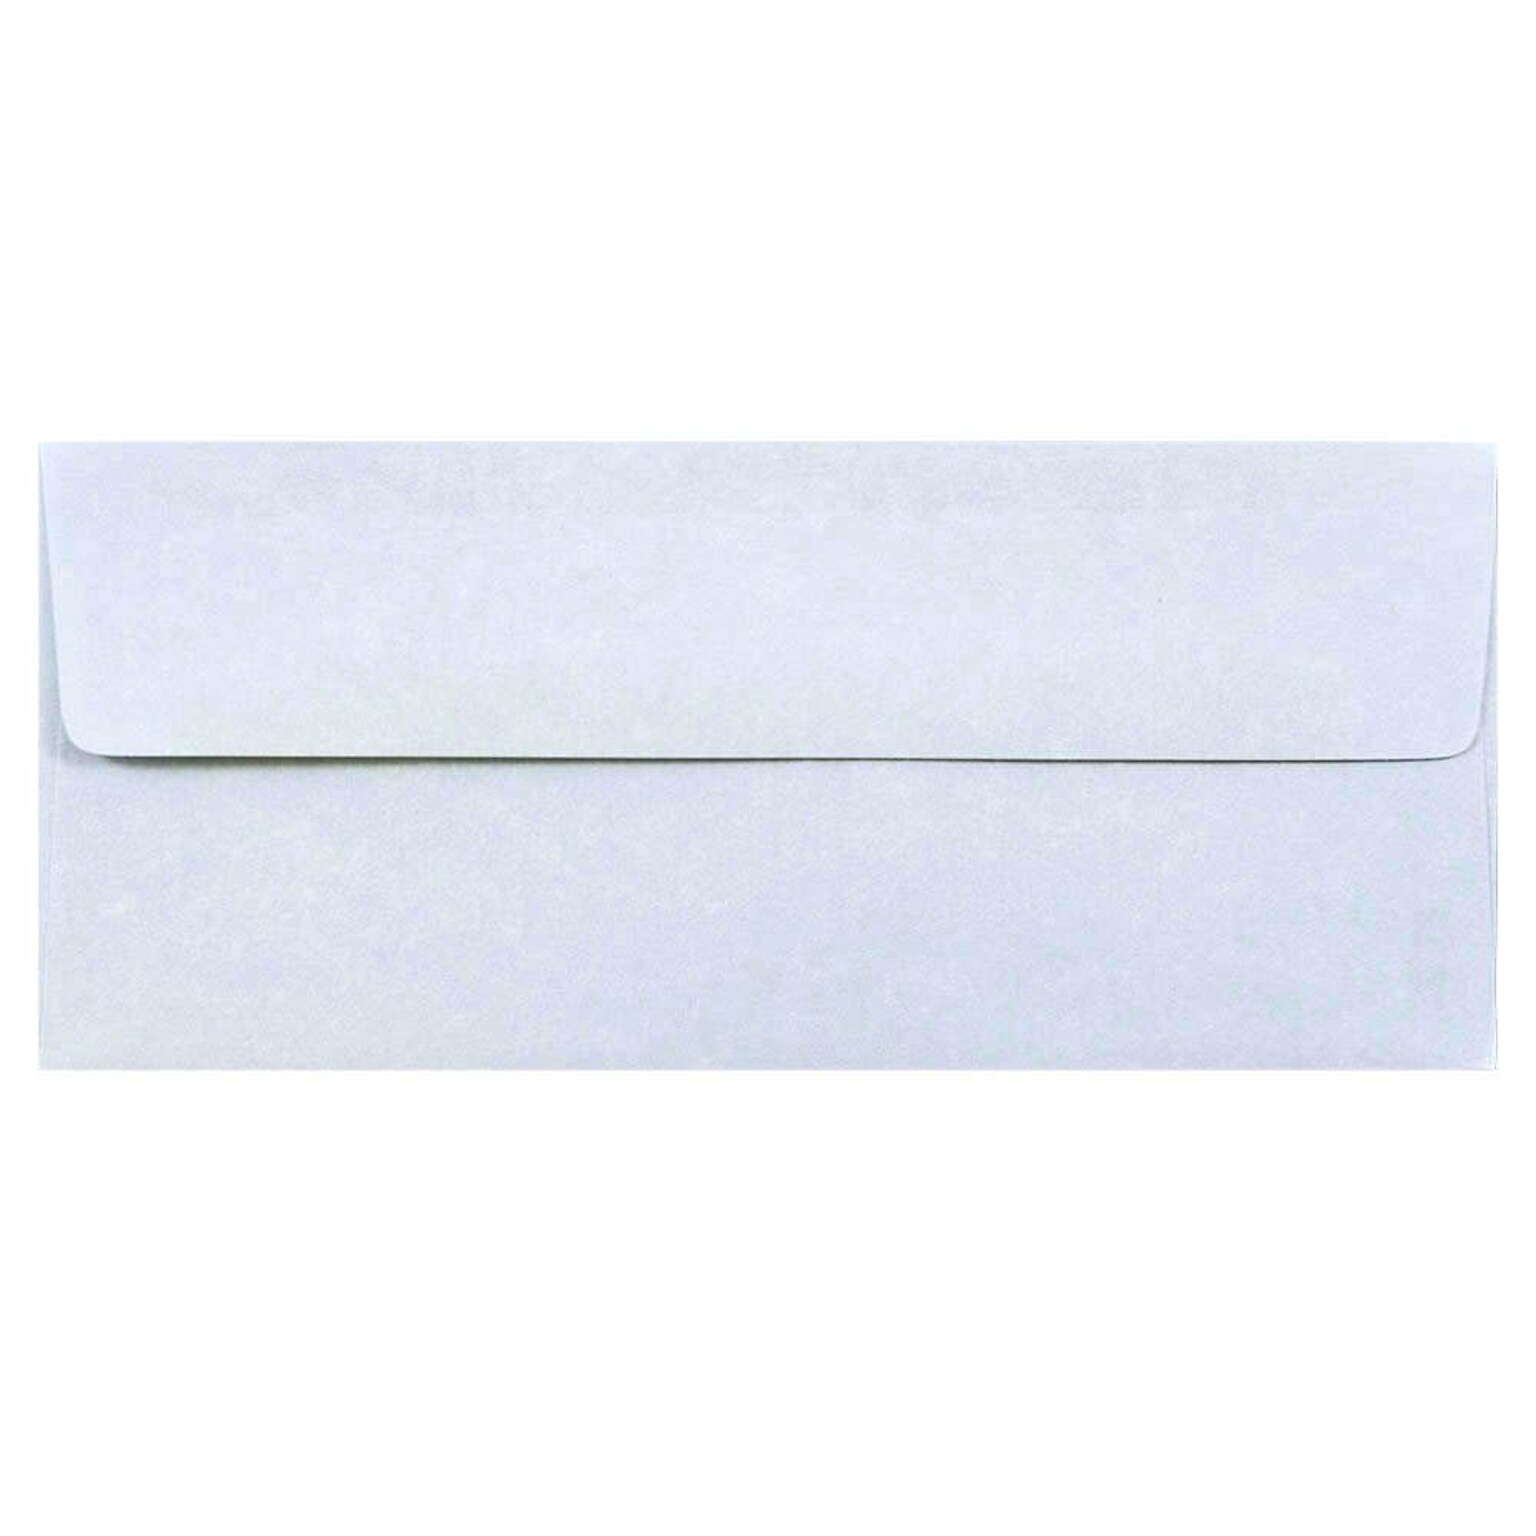 JAM Paper #10 Business Envelope, 4 1/8 x 9 1/2, Blue, 25/Pack (900908732)